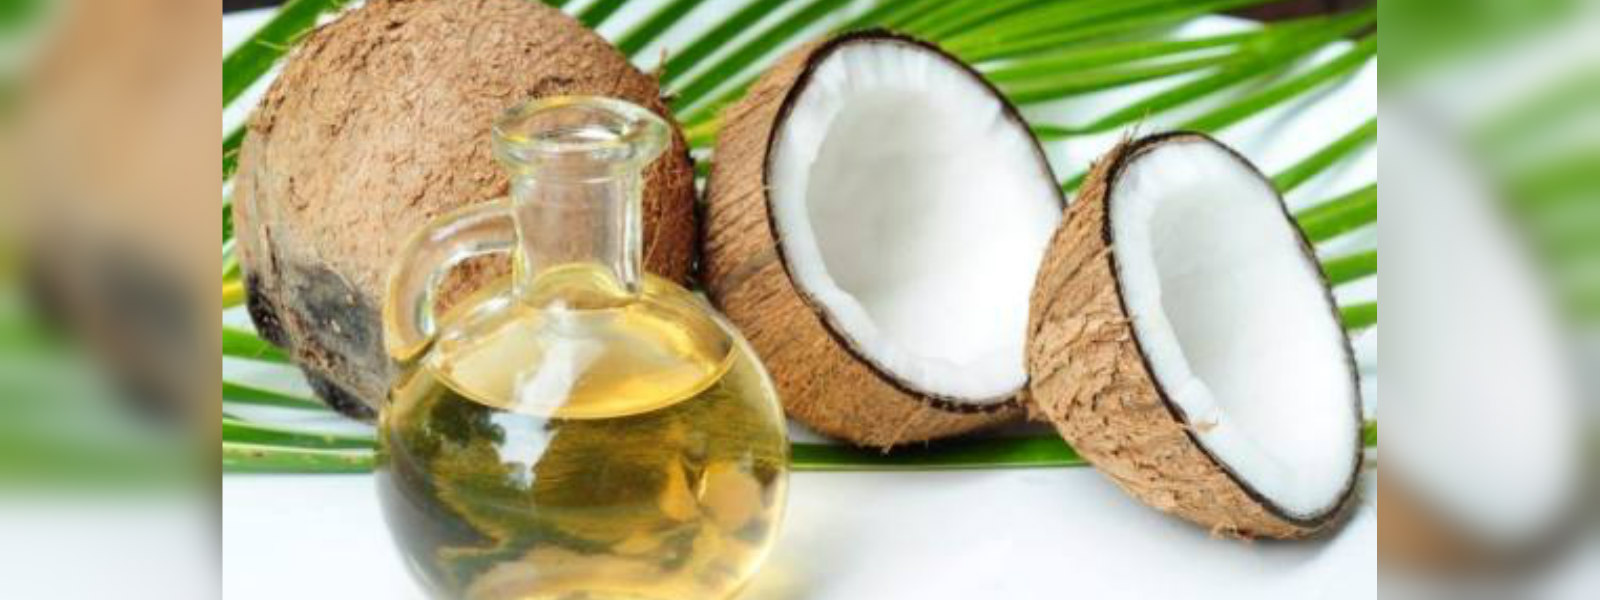 Coconut Oil unsuitable for consumption not found